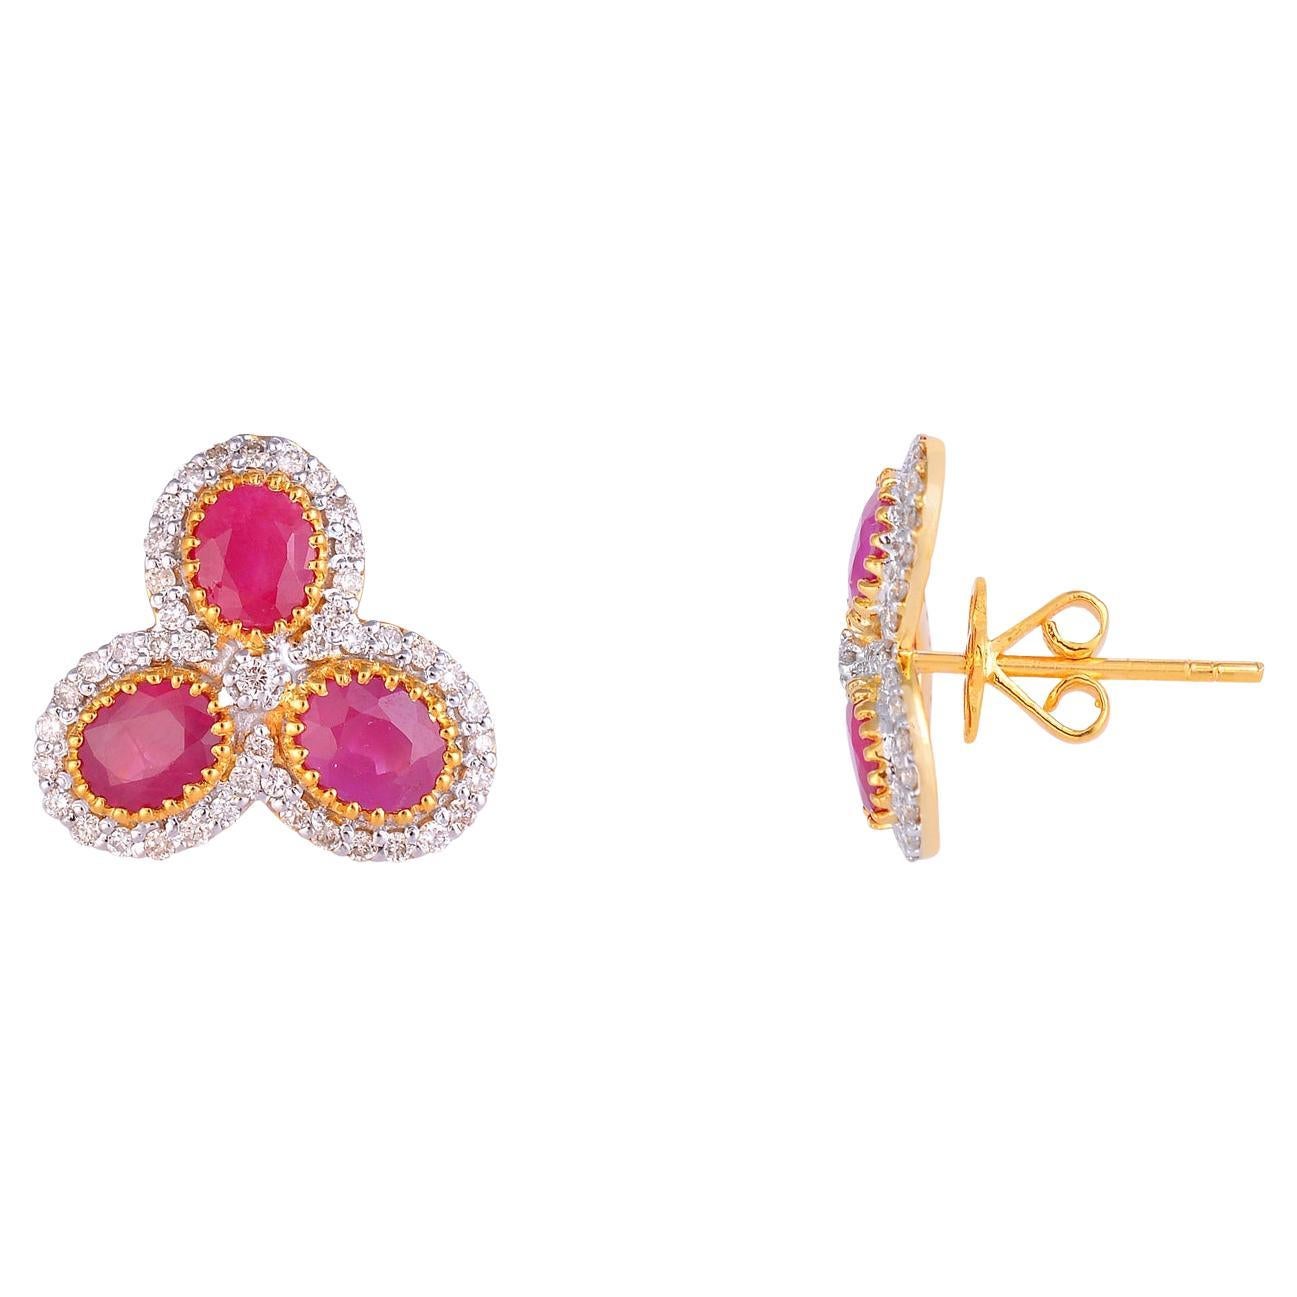 Ruby Stud Earrings with Diamond in 14k Gold